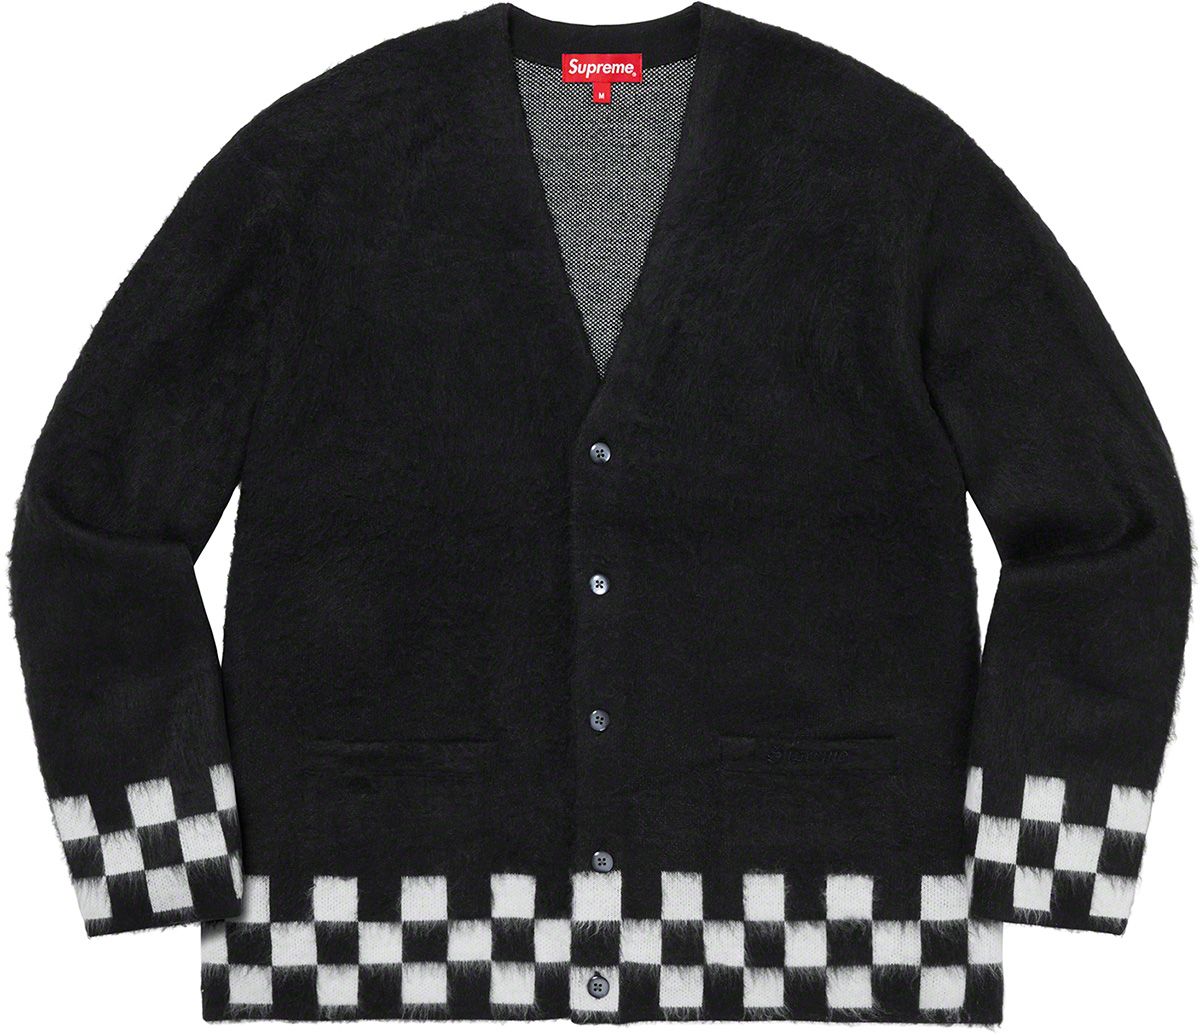 Brushed Checkerboard Cardigan - Supreme